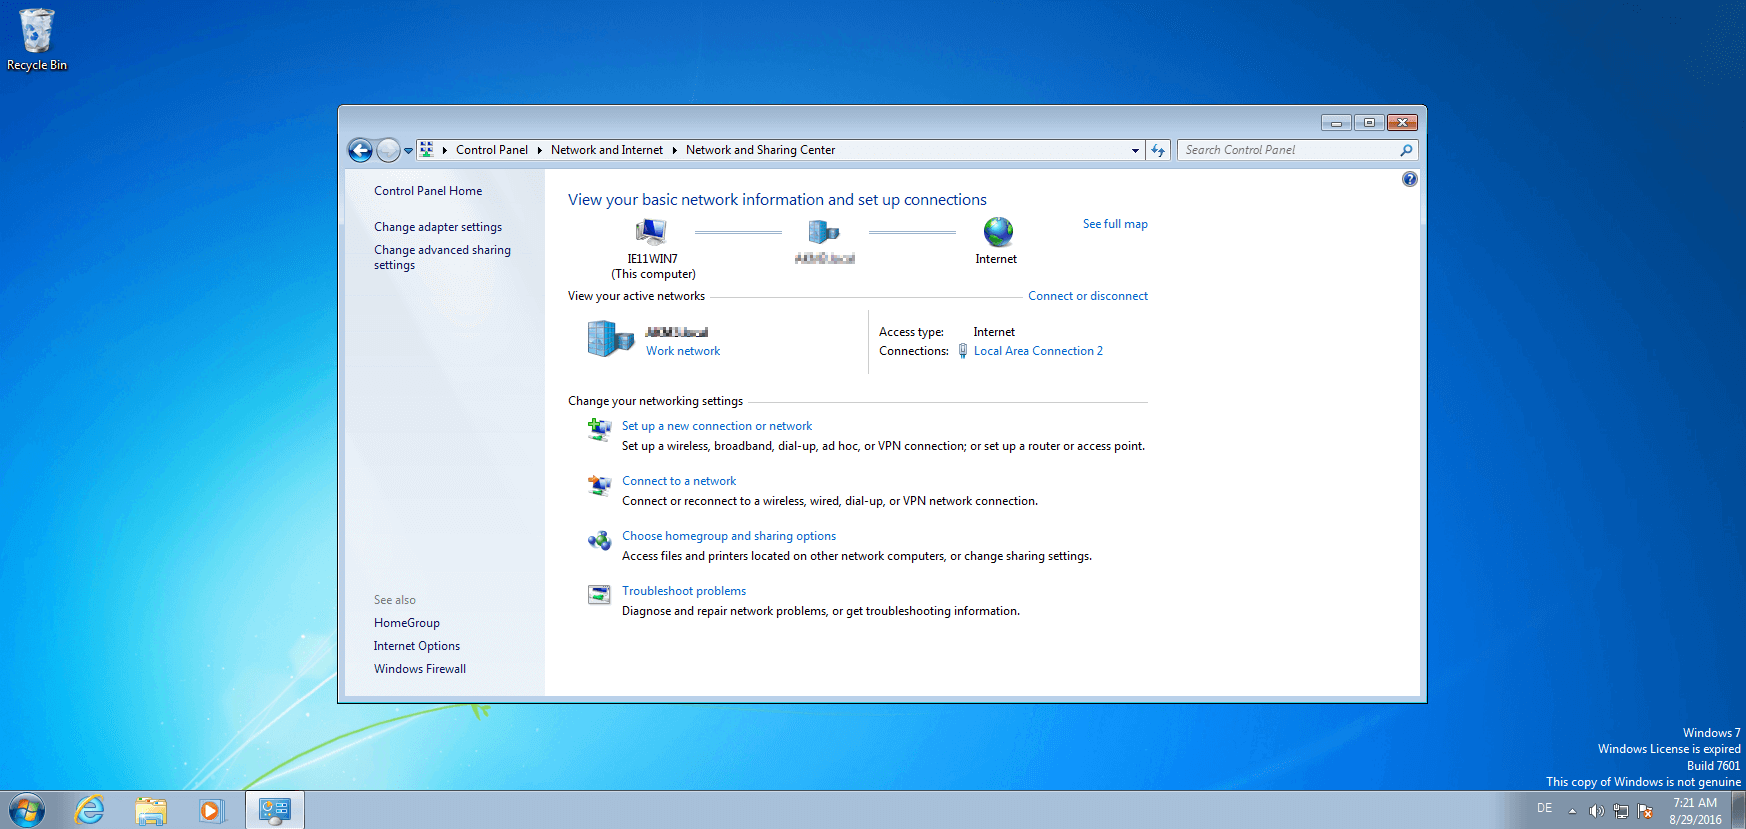 The Windows network settings